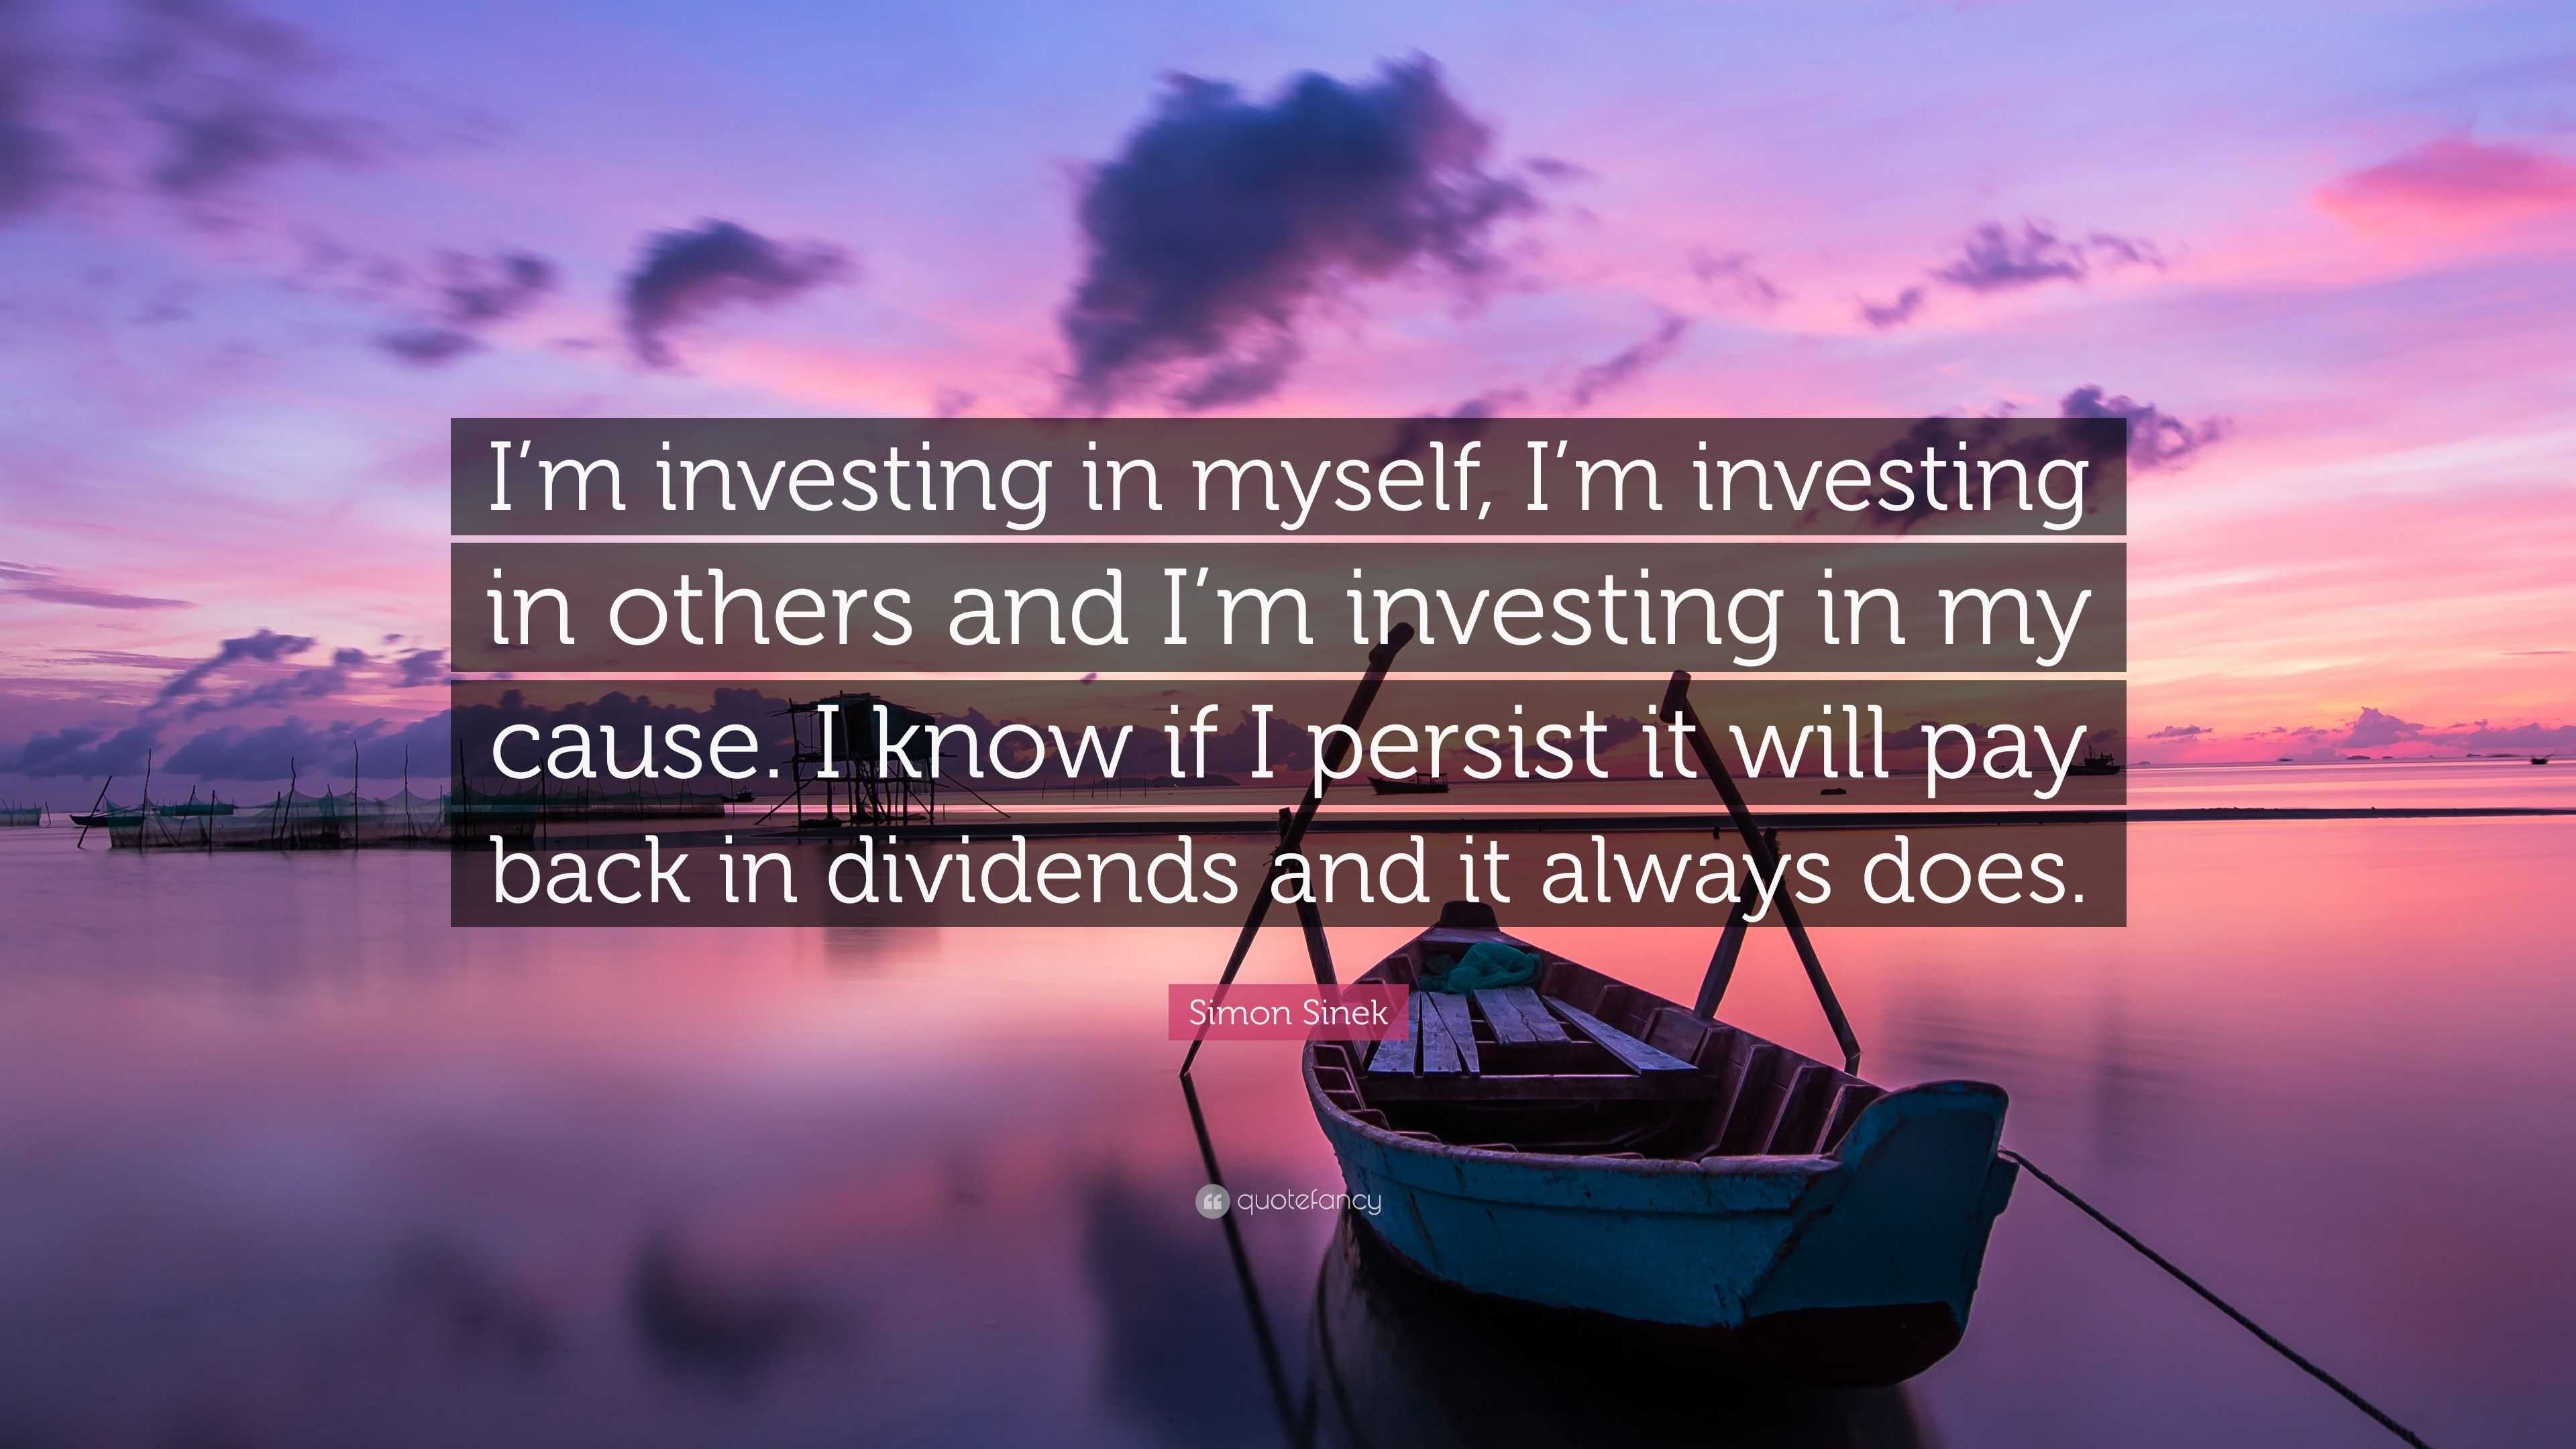 Simon Sinek Quote “I’m investing in myself, I’m investing